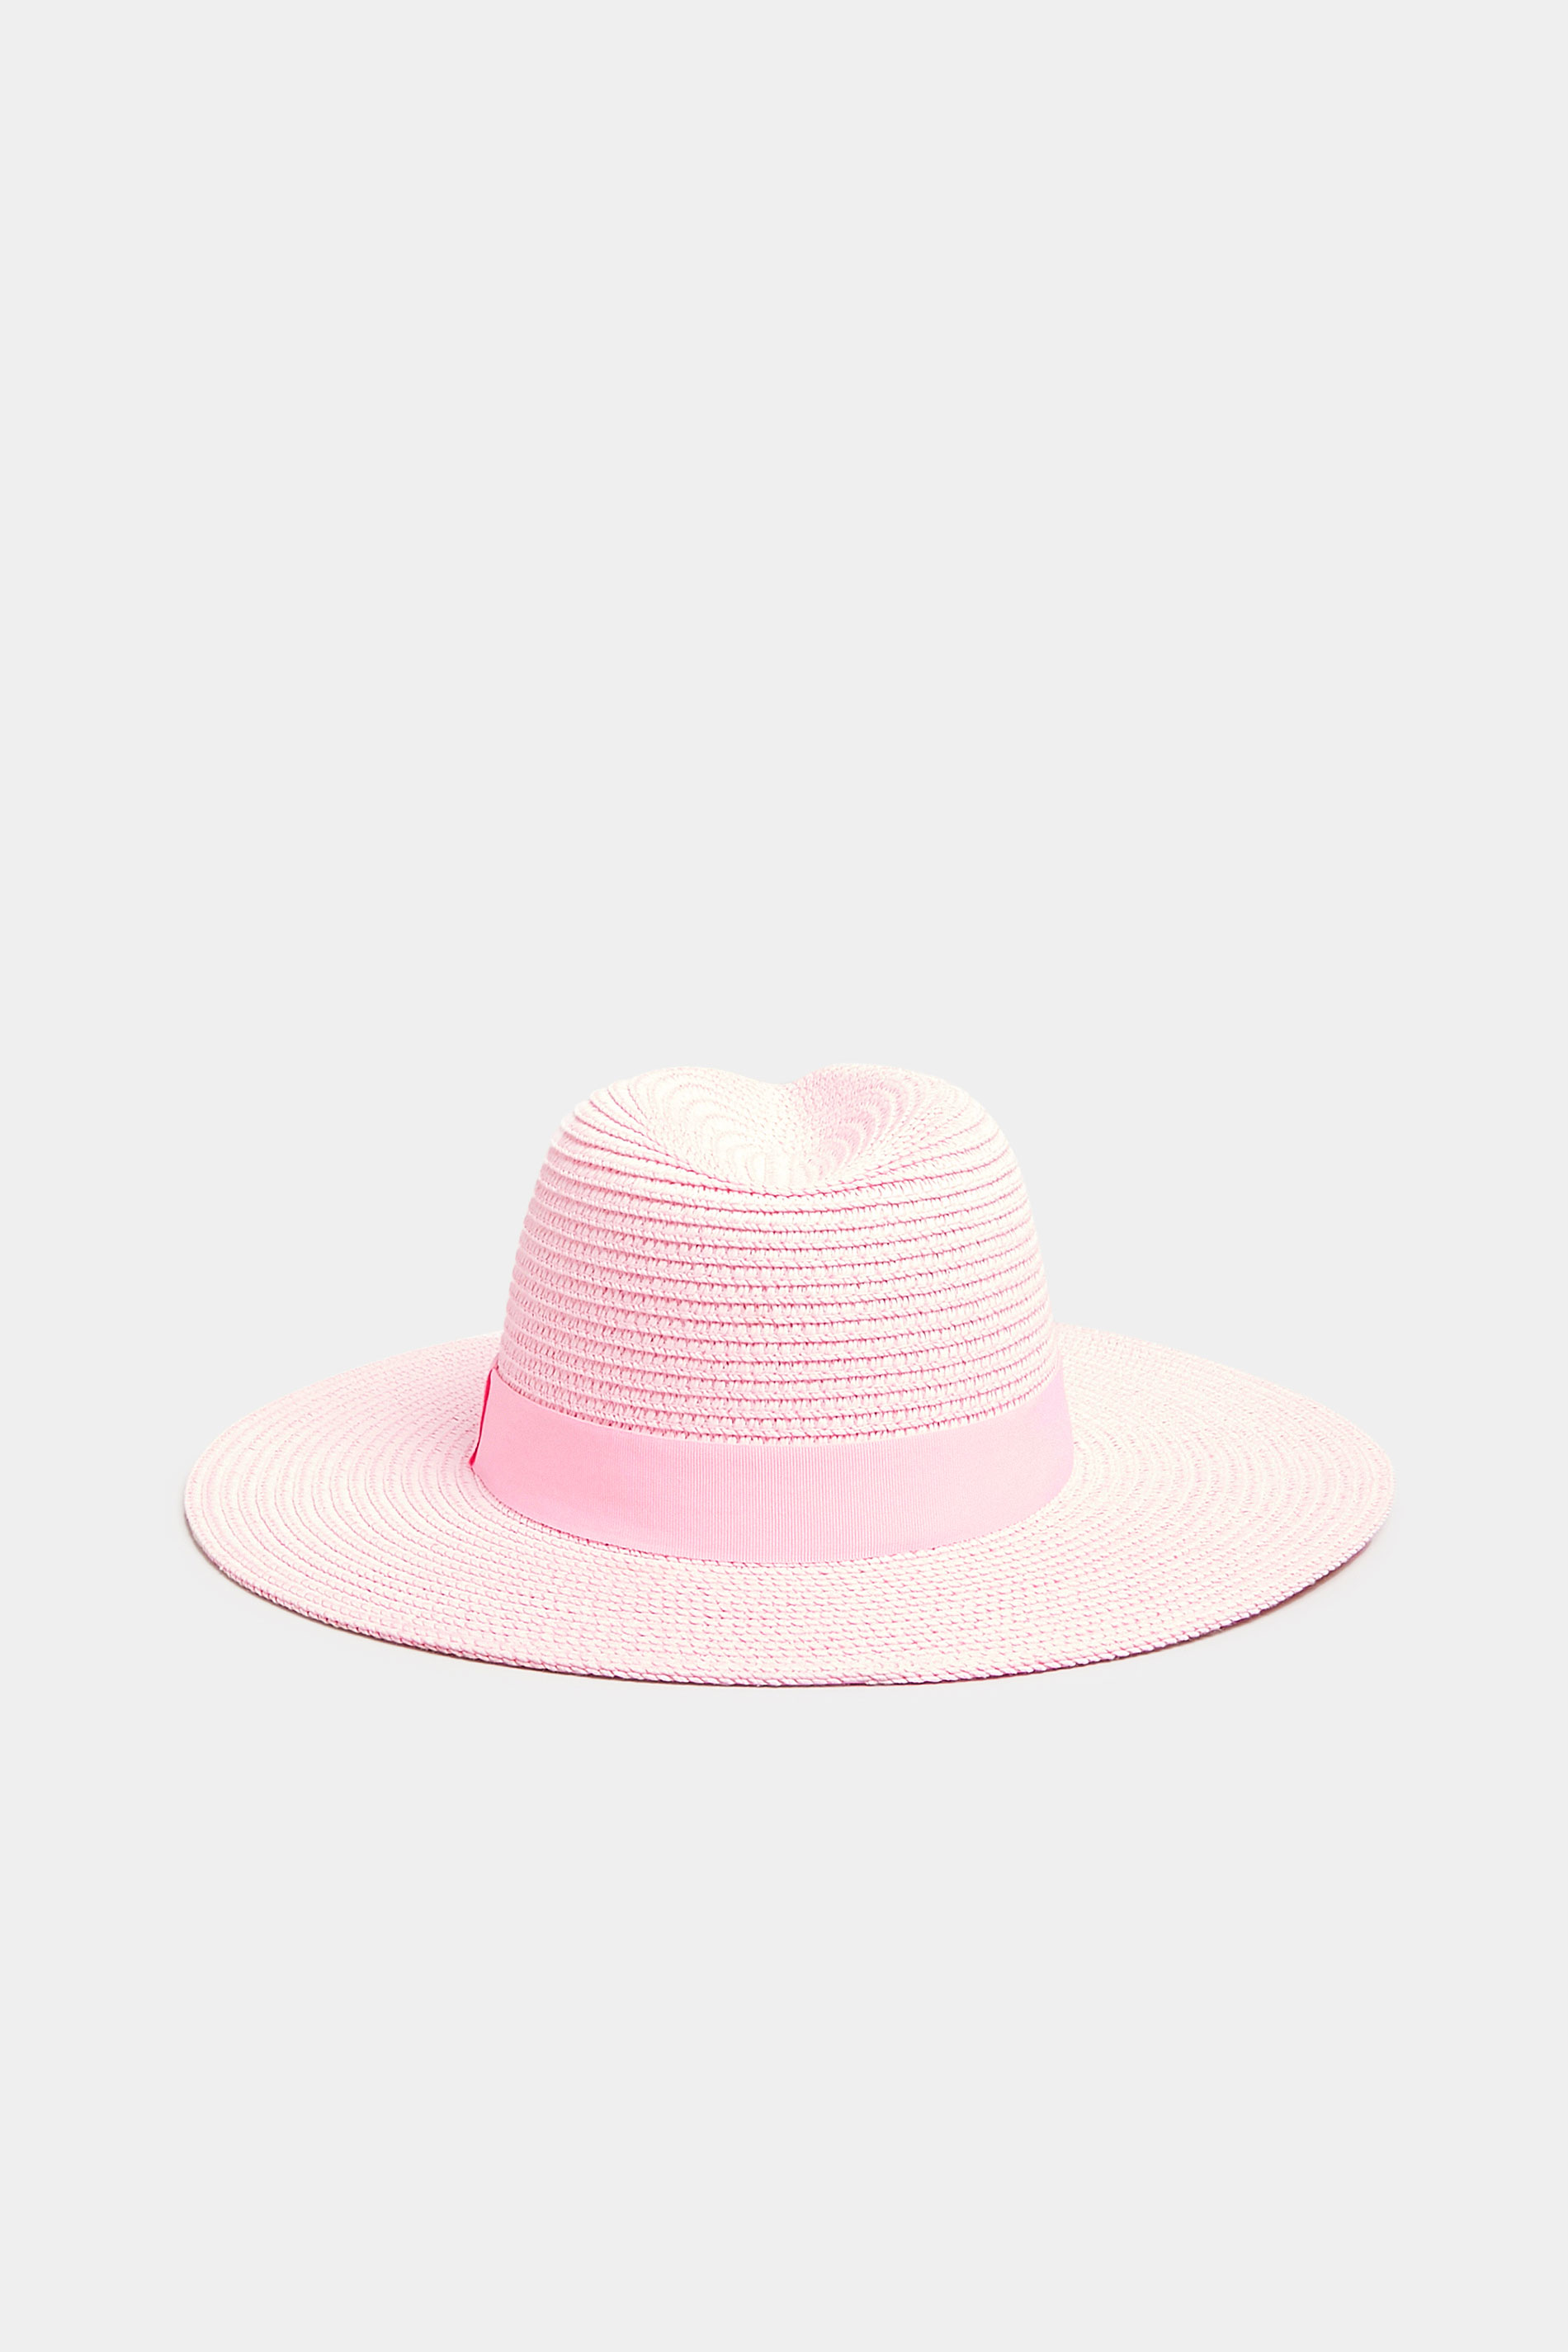 Plus Size Pastel Pink Straw Fedora Hat | Yours Clothing 1